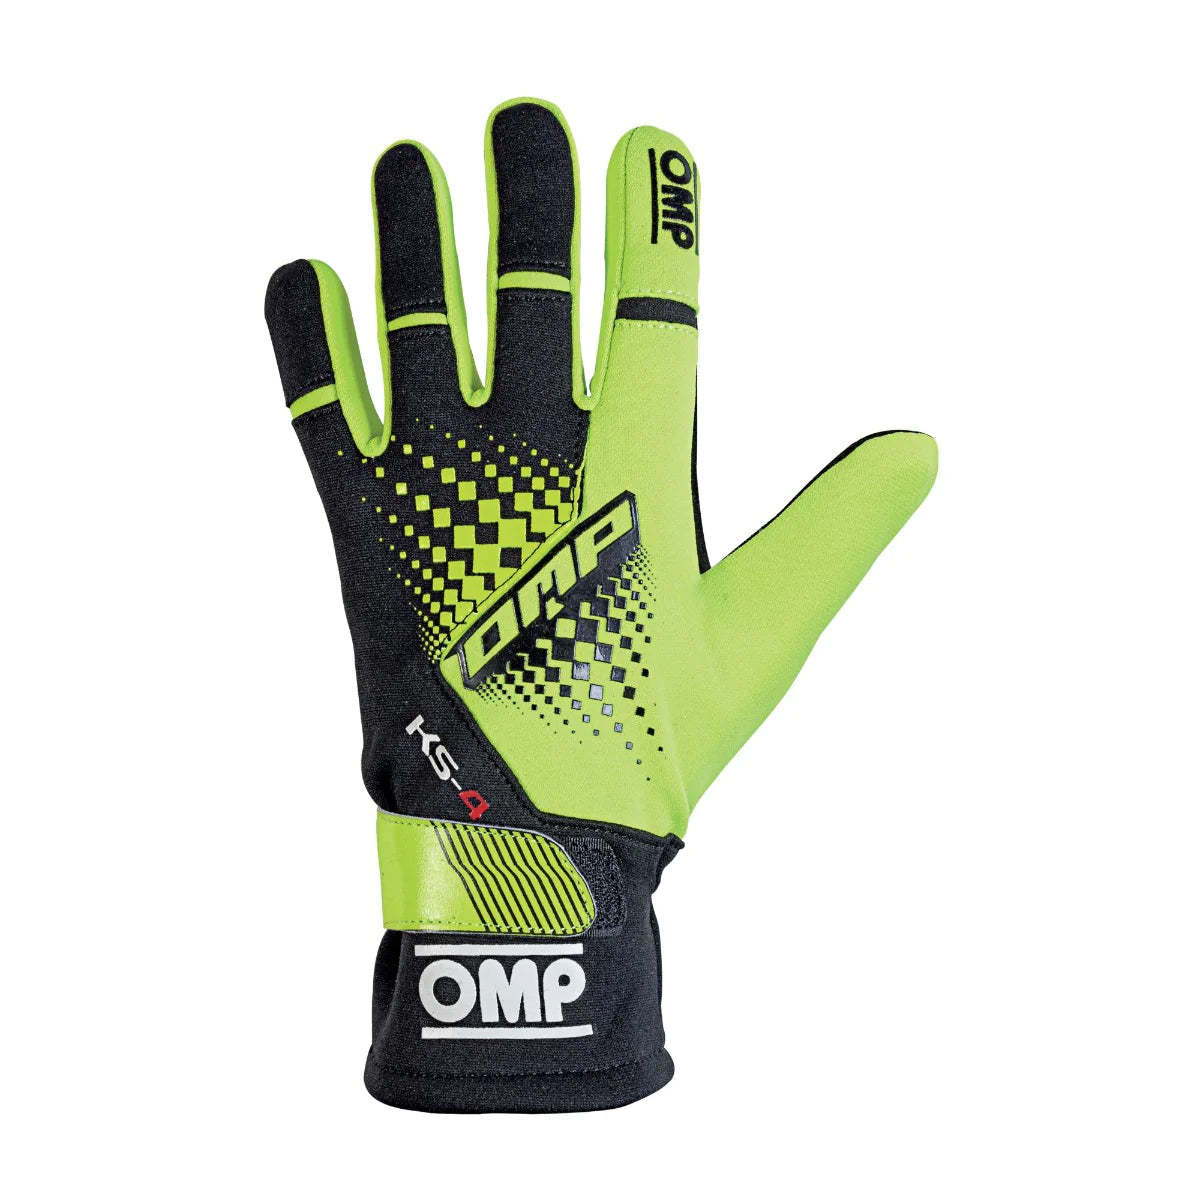 OMP KS-4 Kart Racing Glove